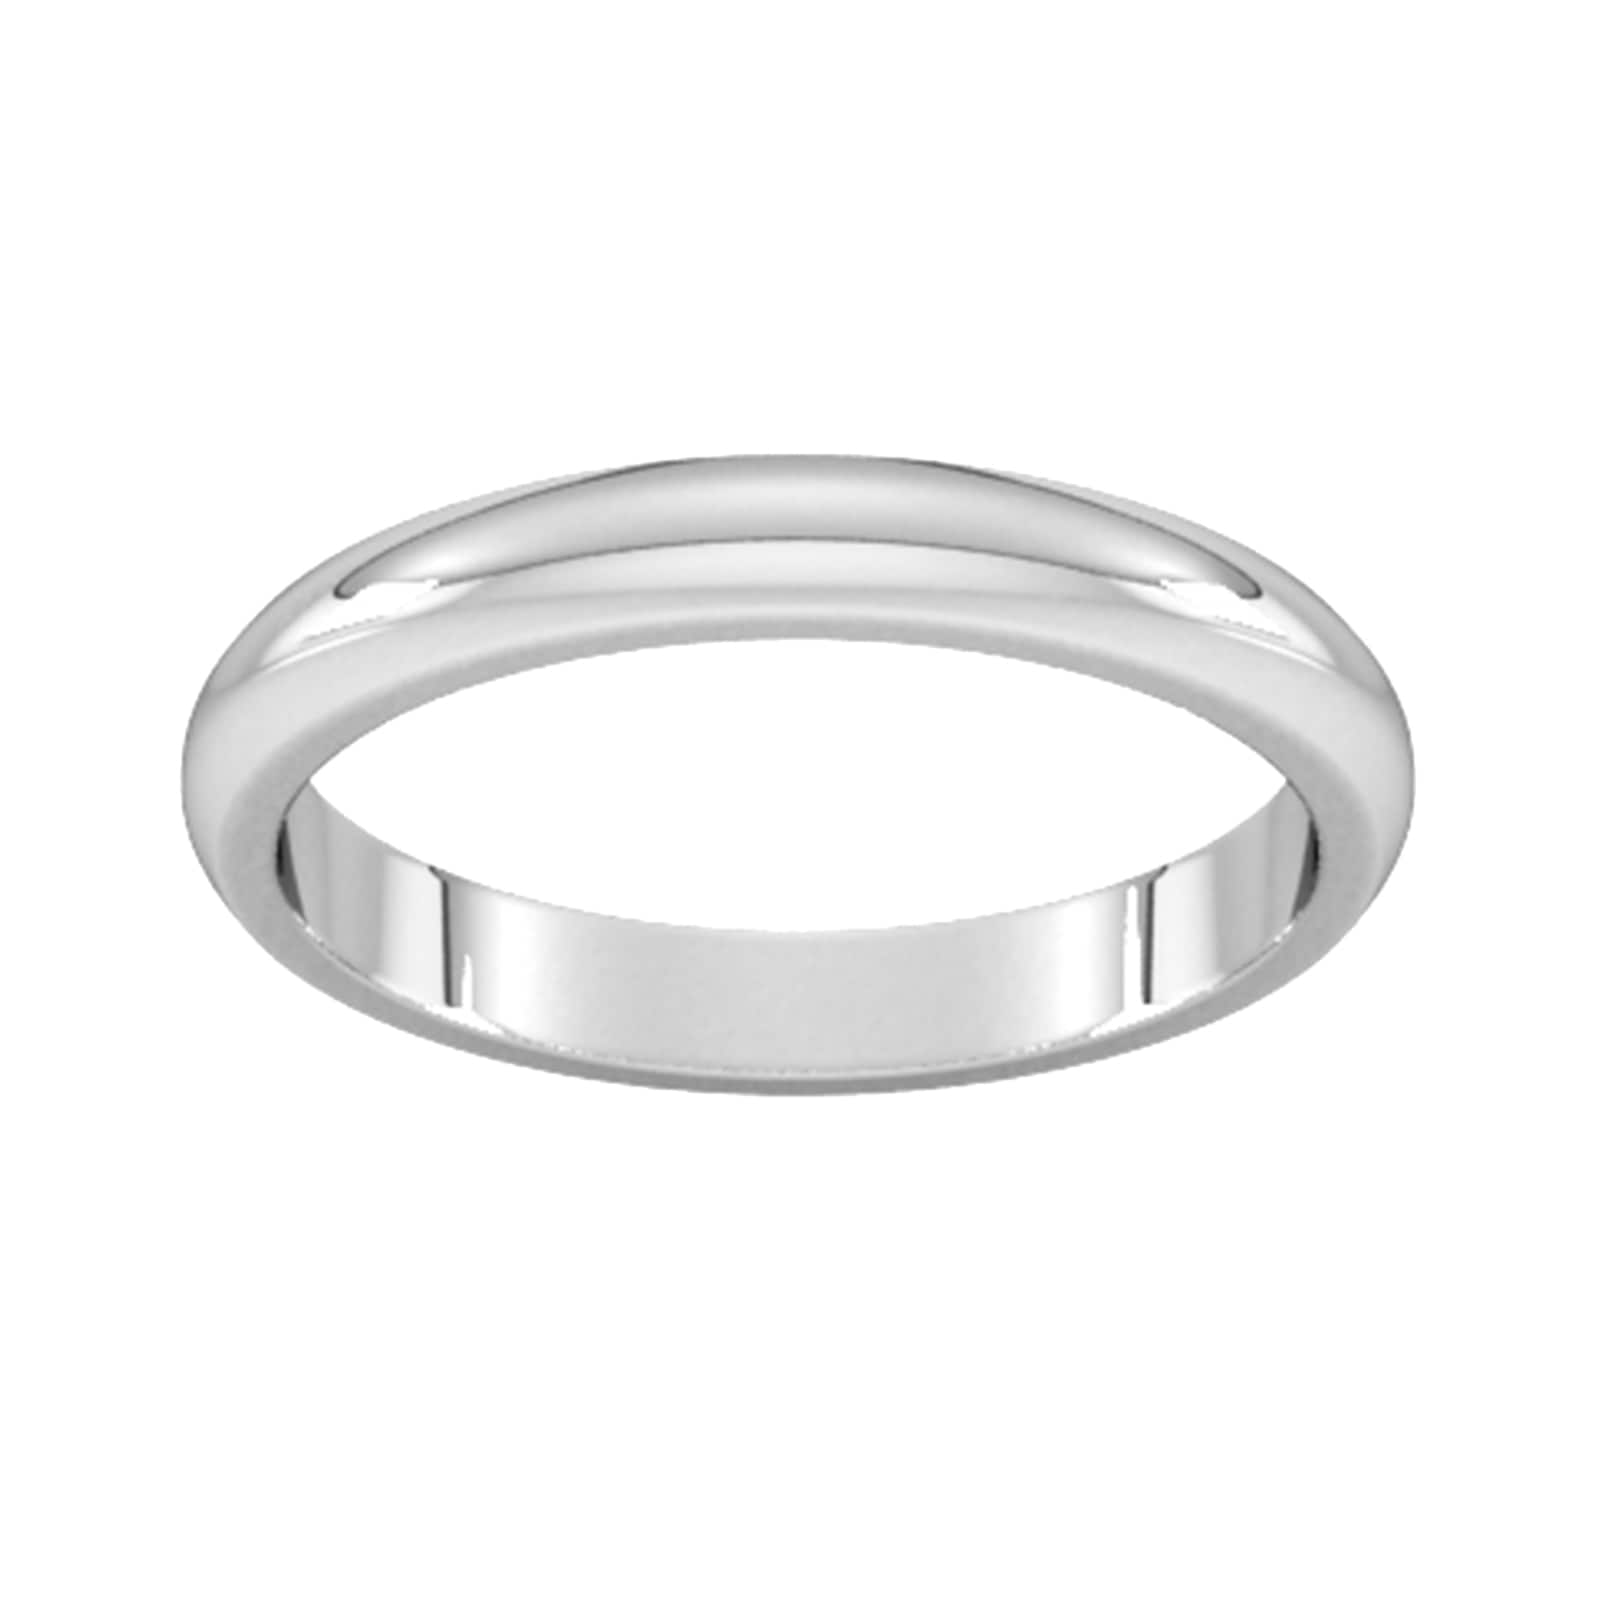 3mm D Shape Heavy Wedding Ring In 950 Palladium - Ring Size S